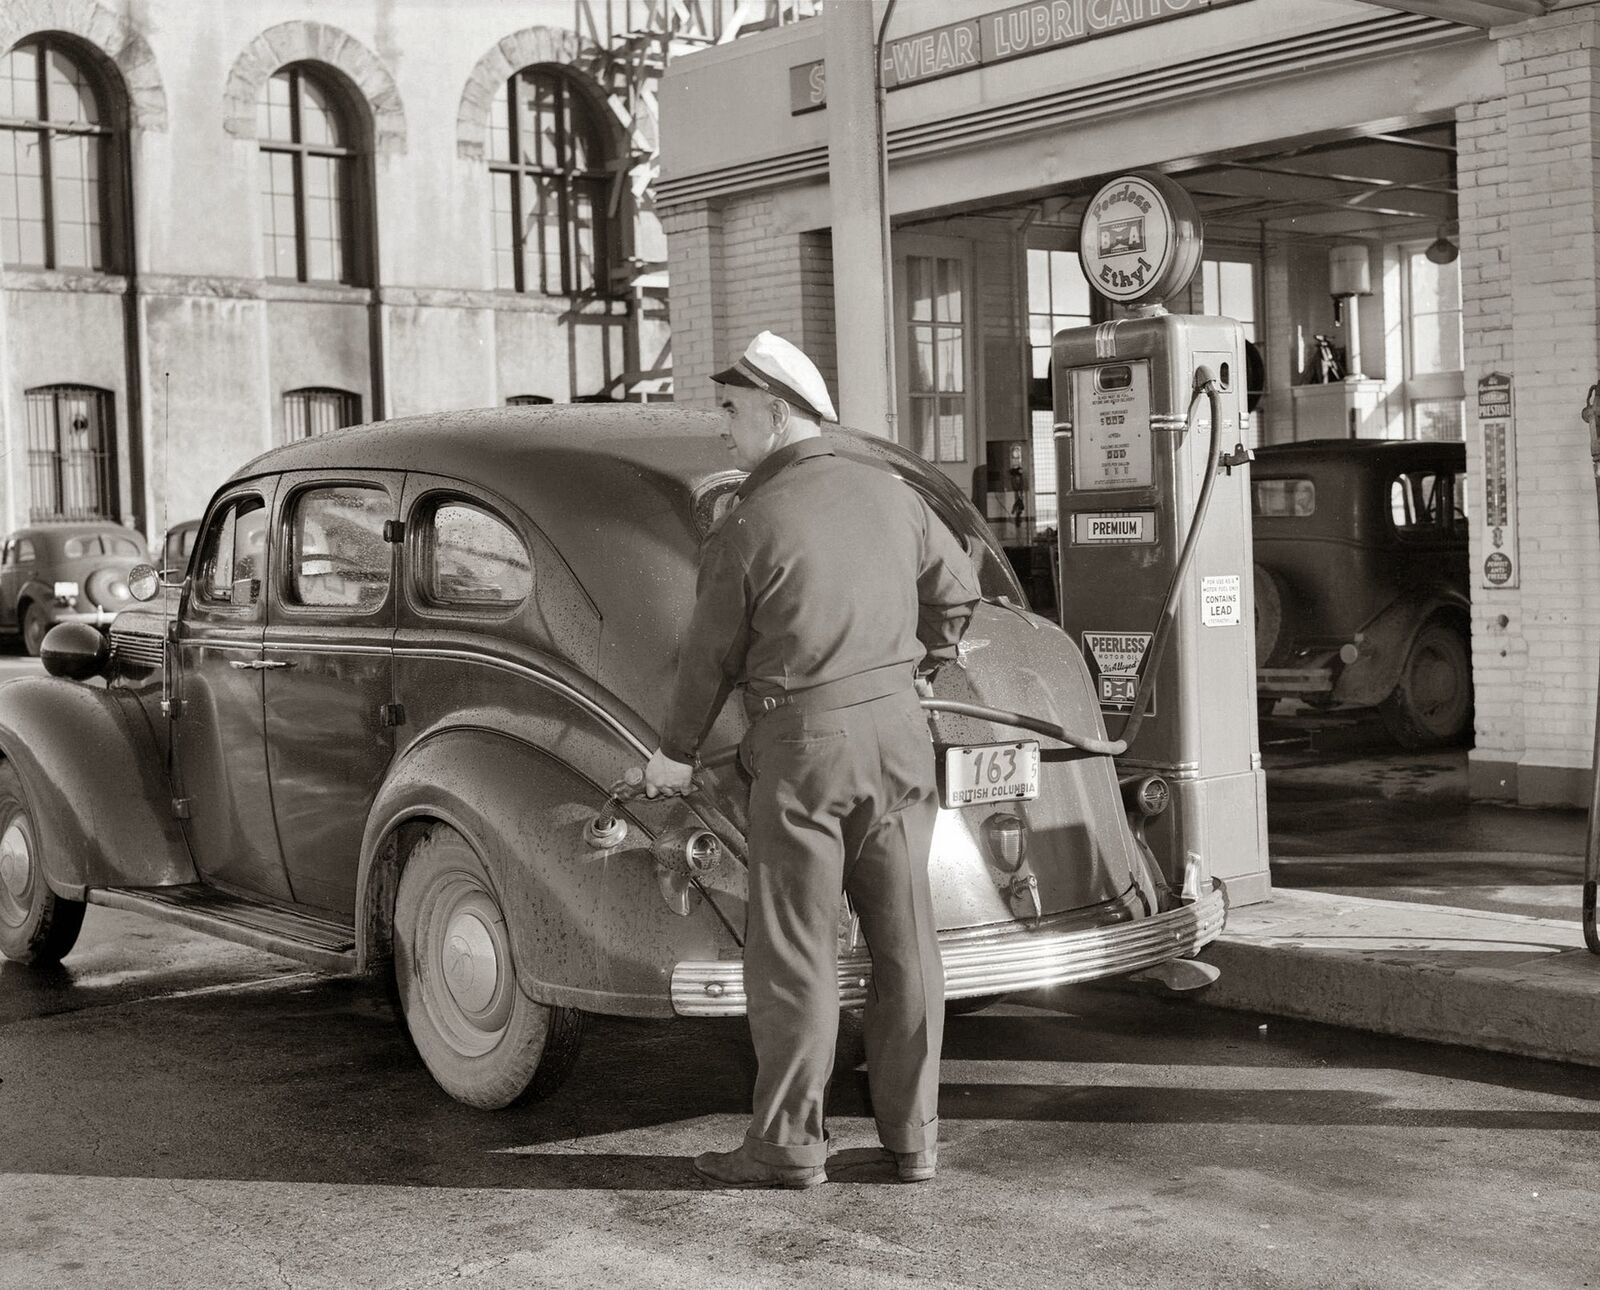 1937 DESOTO Touring Sedan at GAS STATION Photo  (216-D)